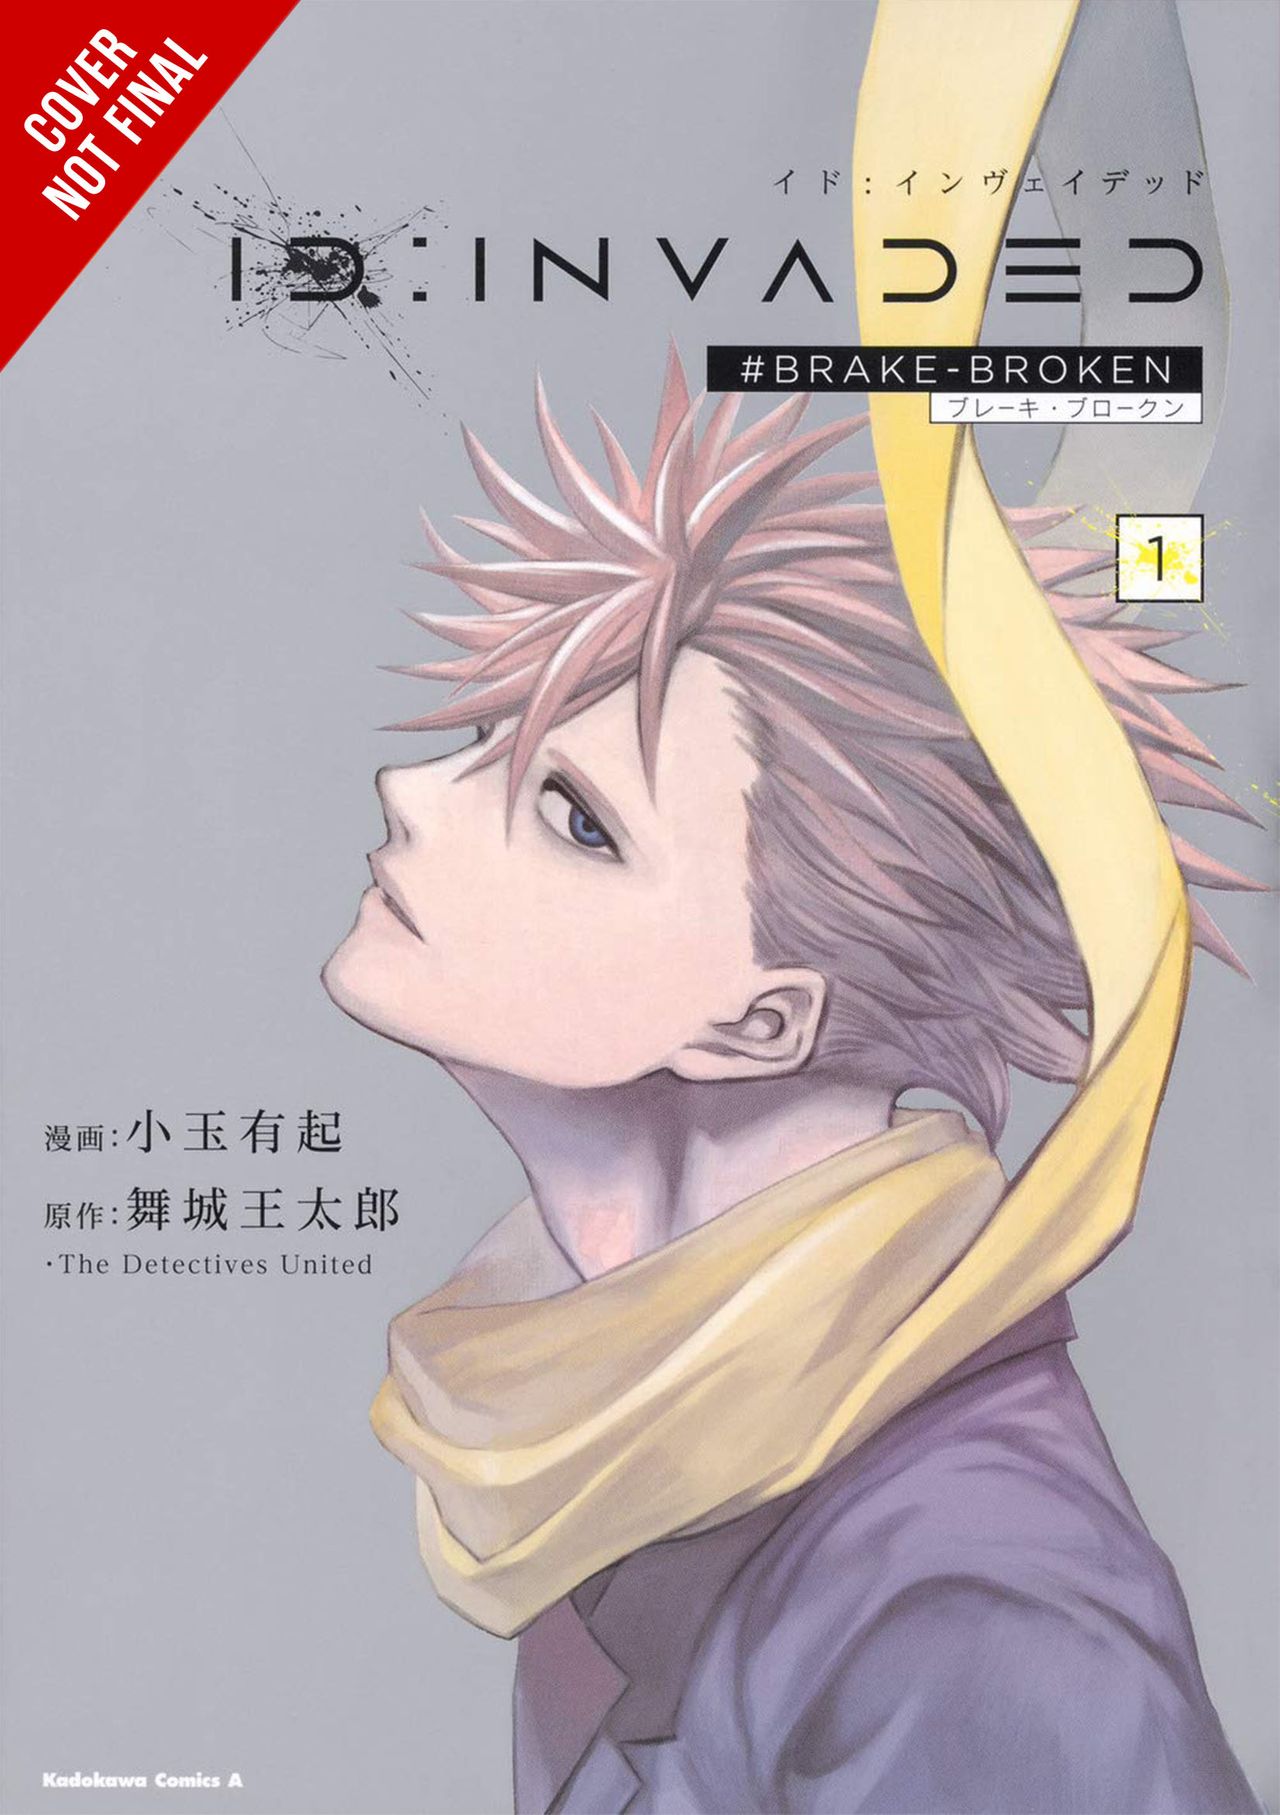 Yen Press Announces ID Invaded BrakeBroken Manga